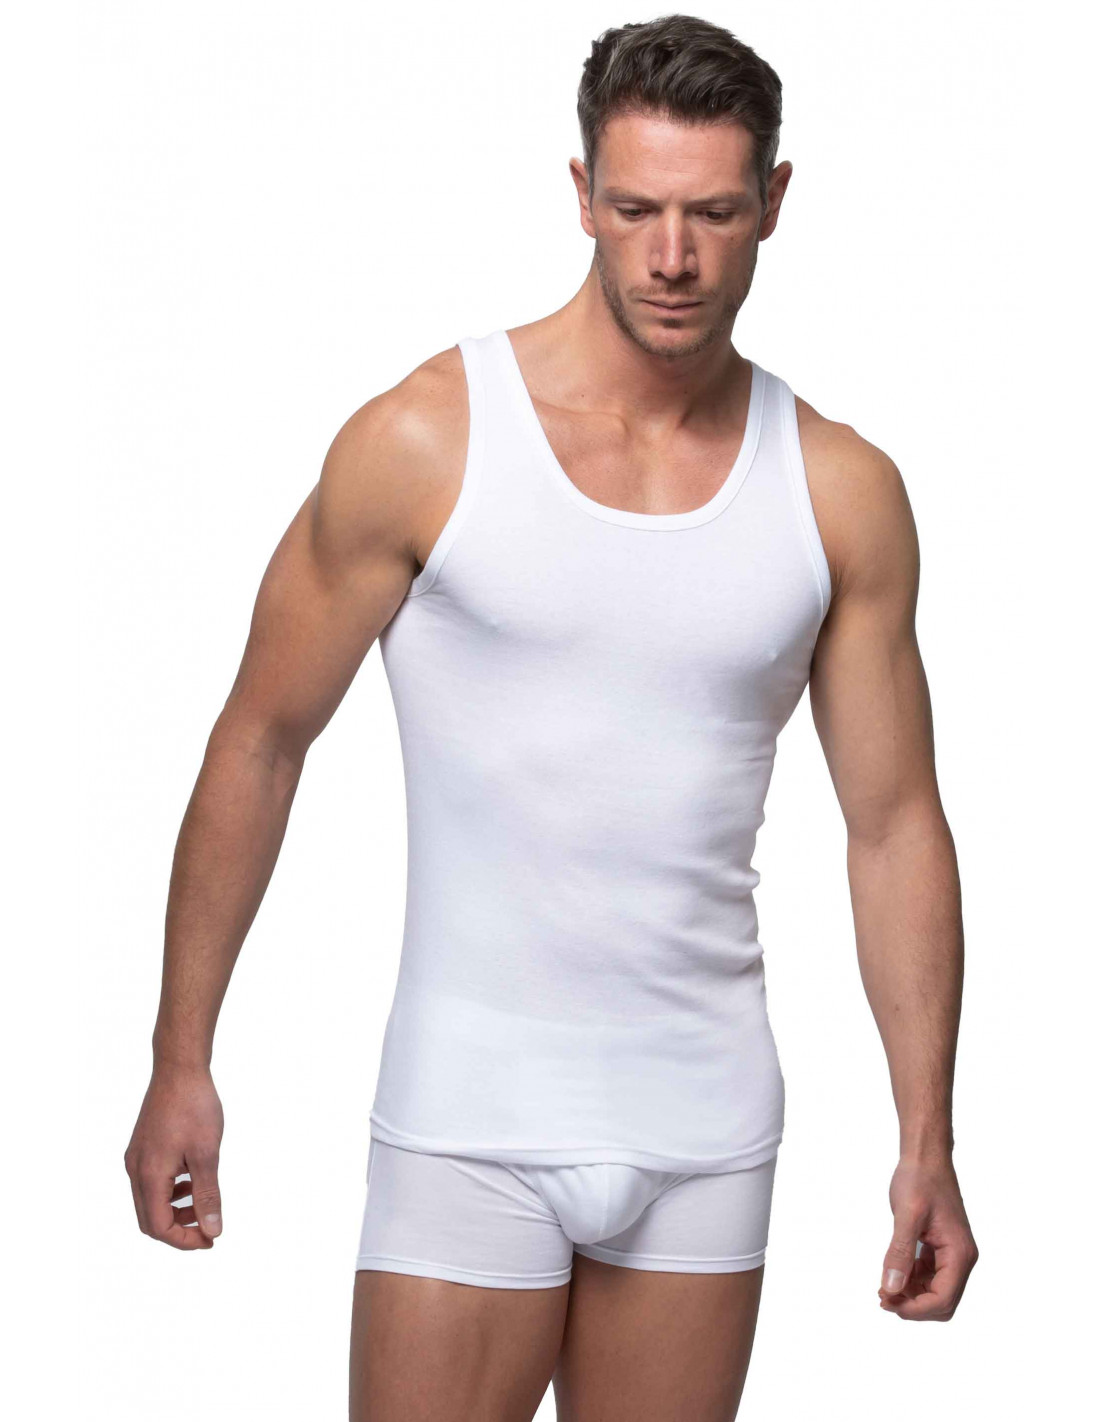 Camiseta interior tirantes para hombre con tejido en algodón natural